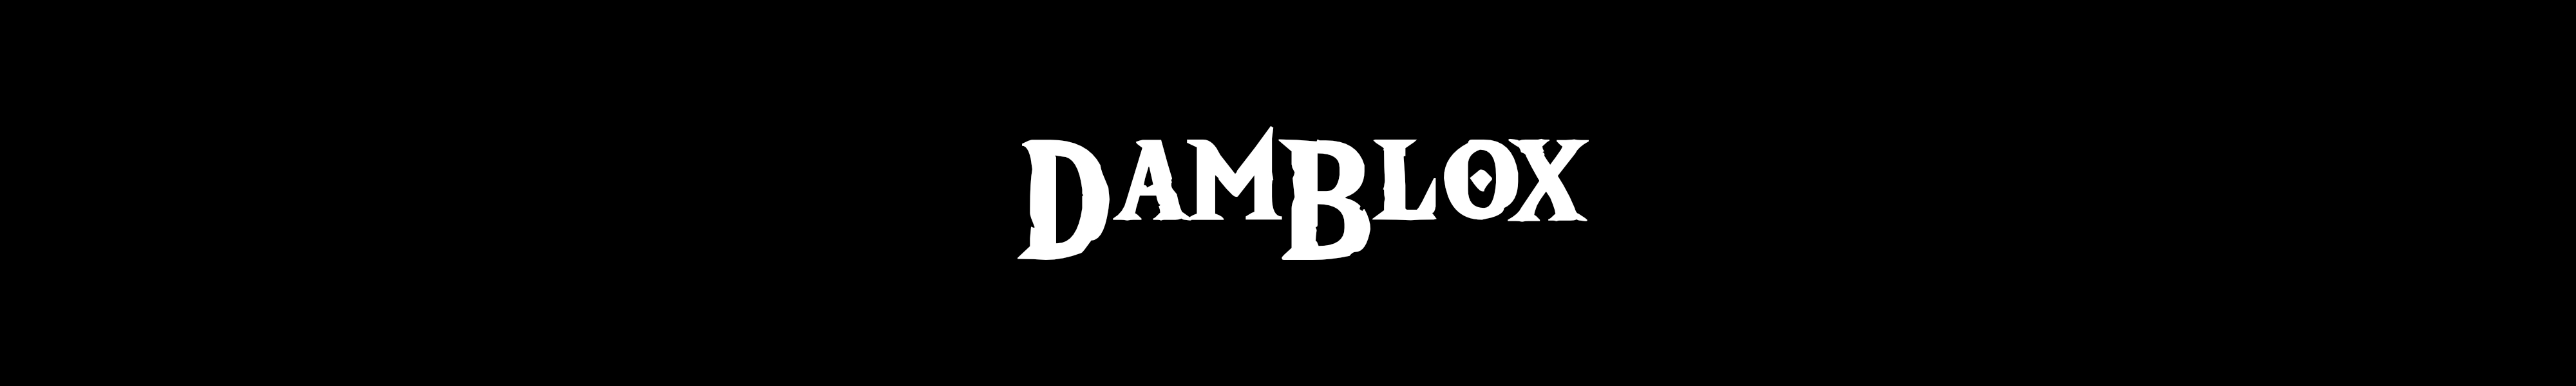 DamBlox banner